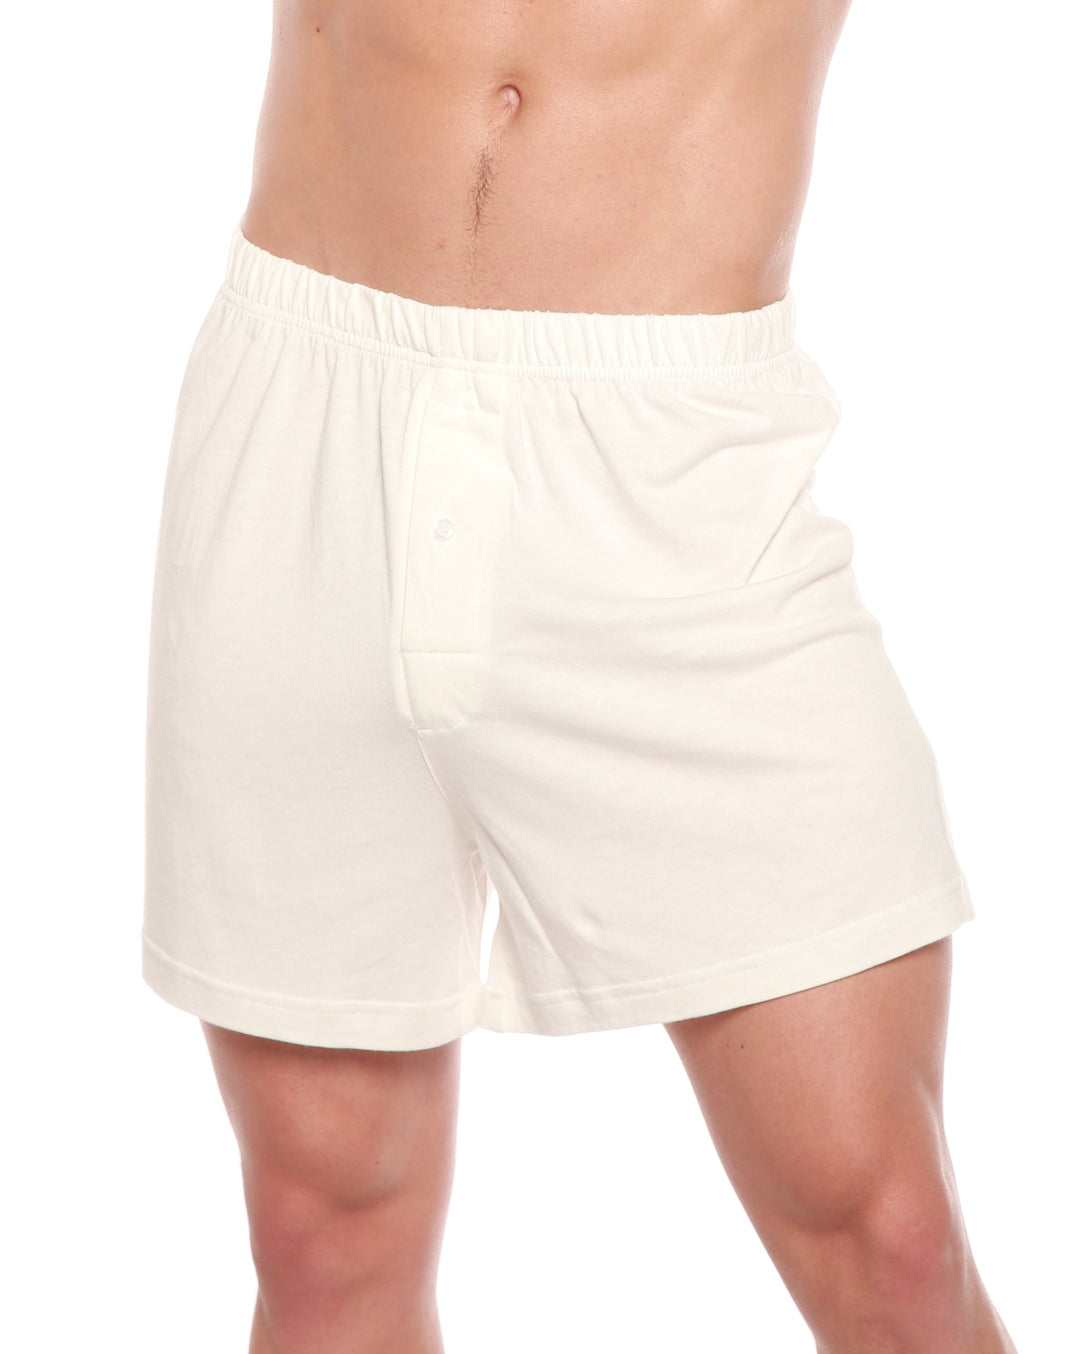 Buy Wholesale China Wholesale Cotton Men's Underwear Quick Dry